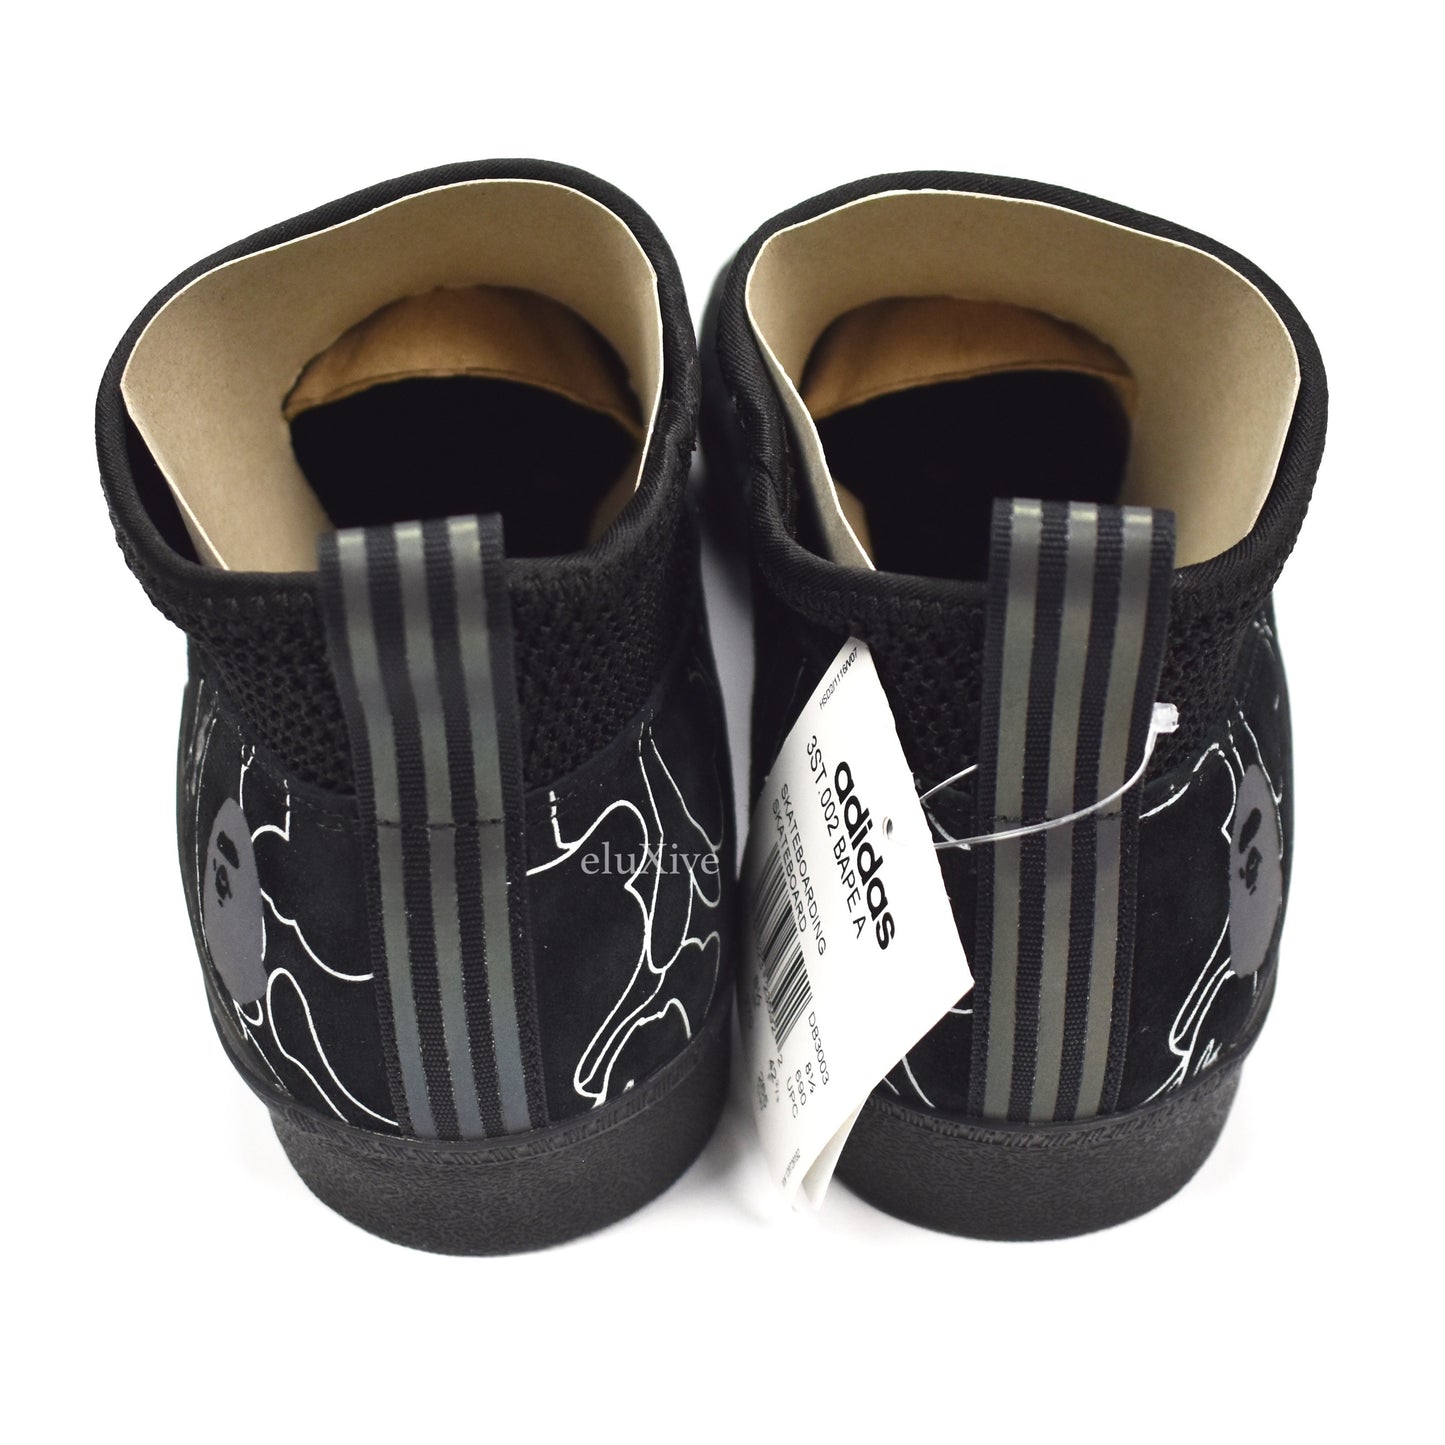 Adidas x Bape - 3ST.002 Snowboarding Sneakers